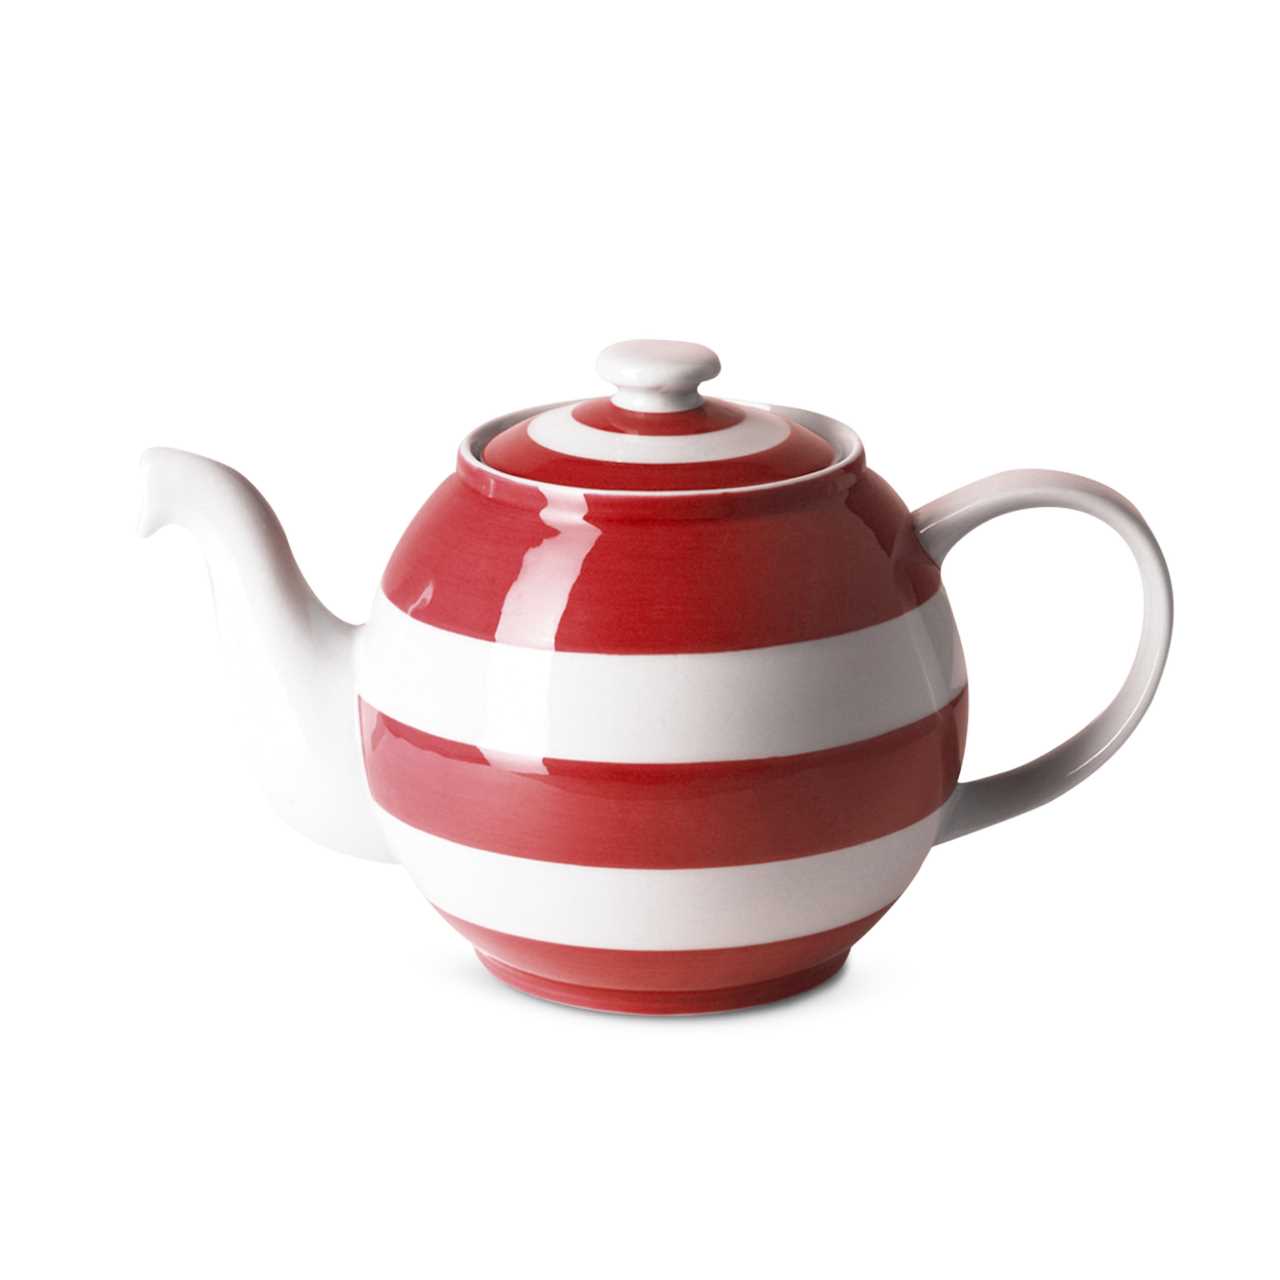 Cornishware Pottery Teapot in red stripes